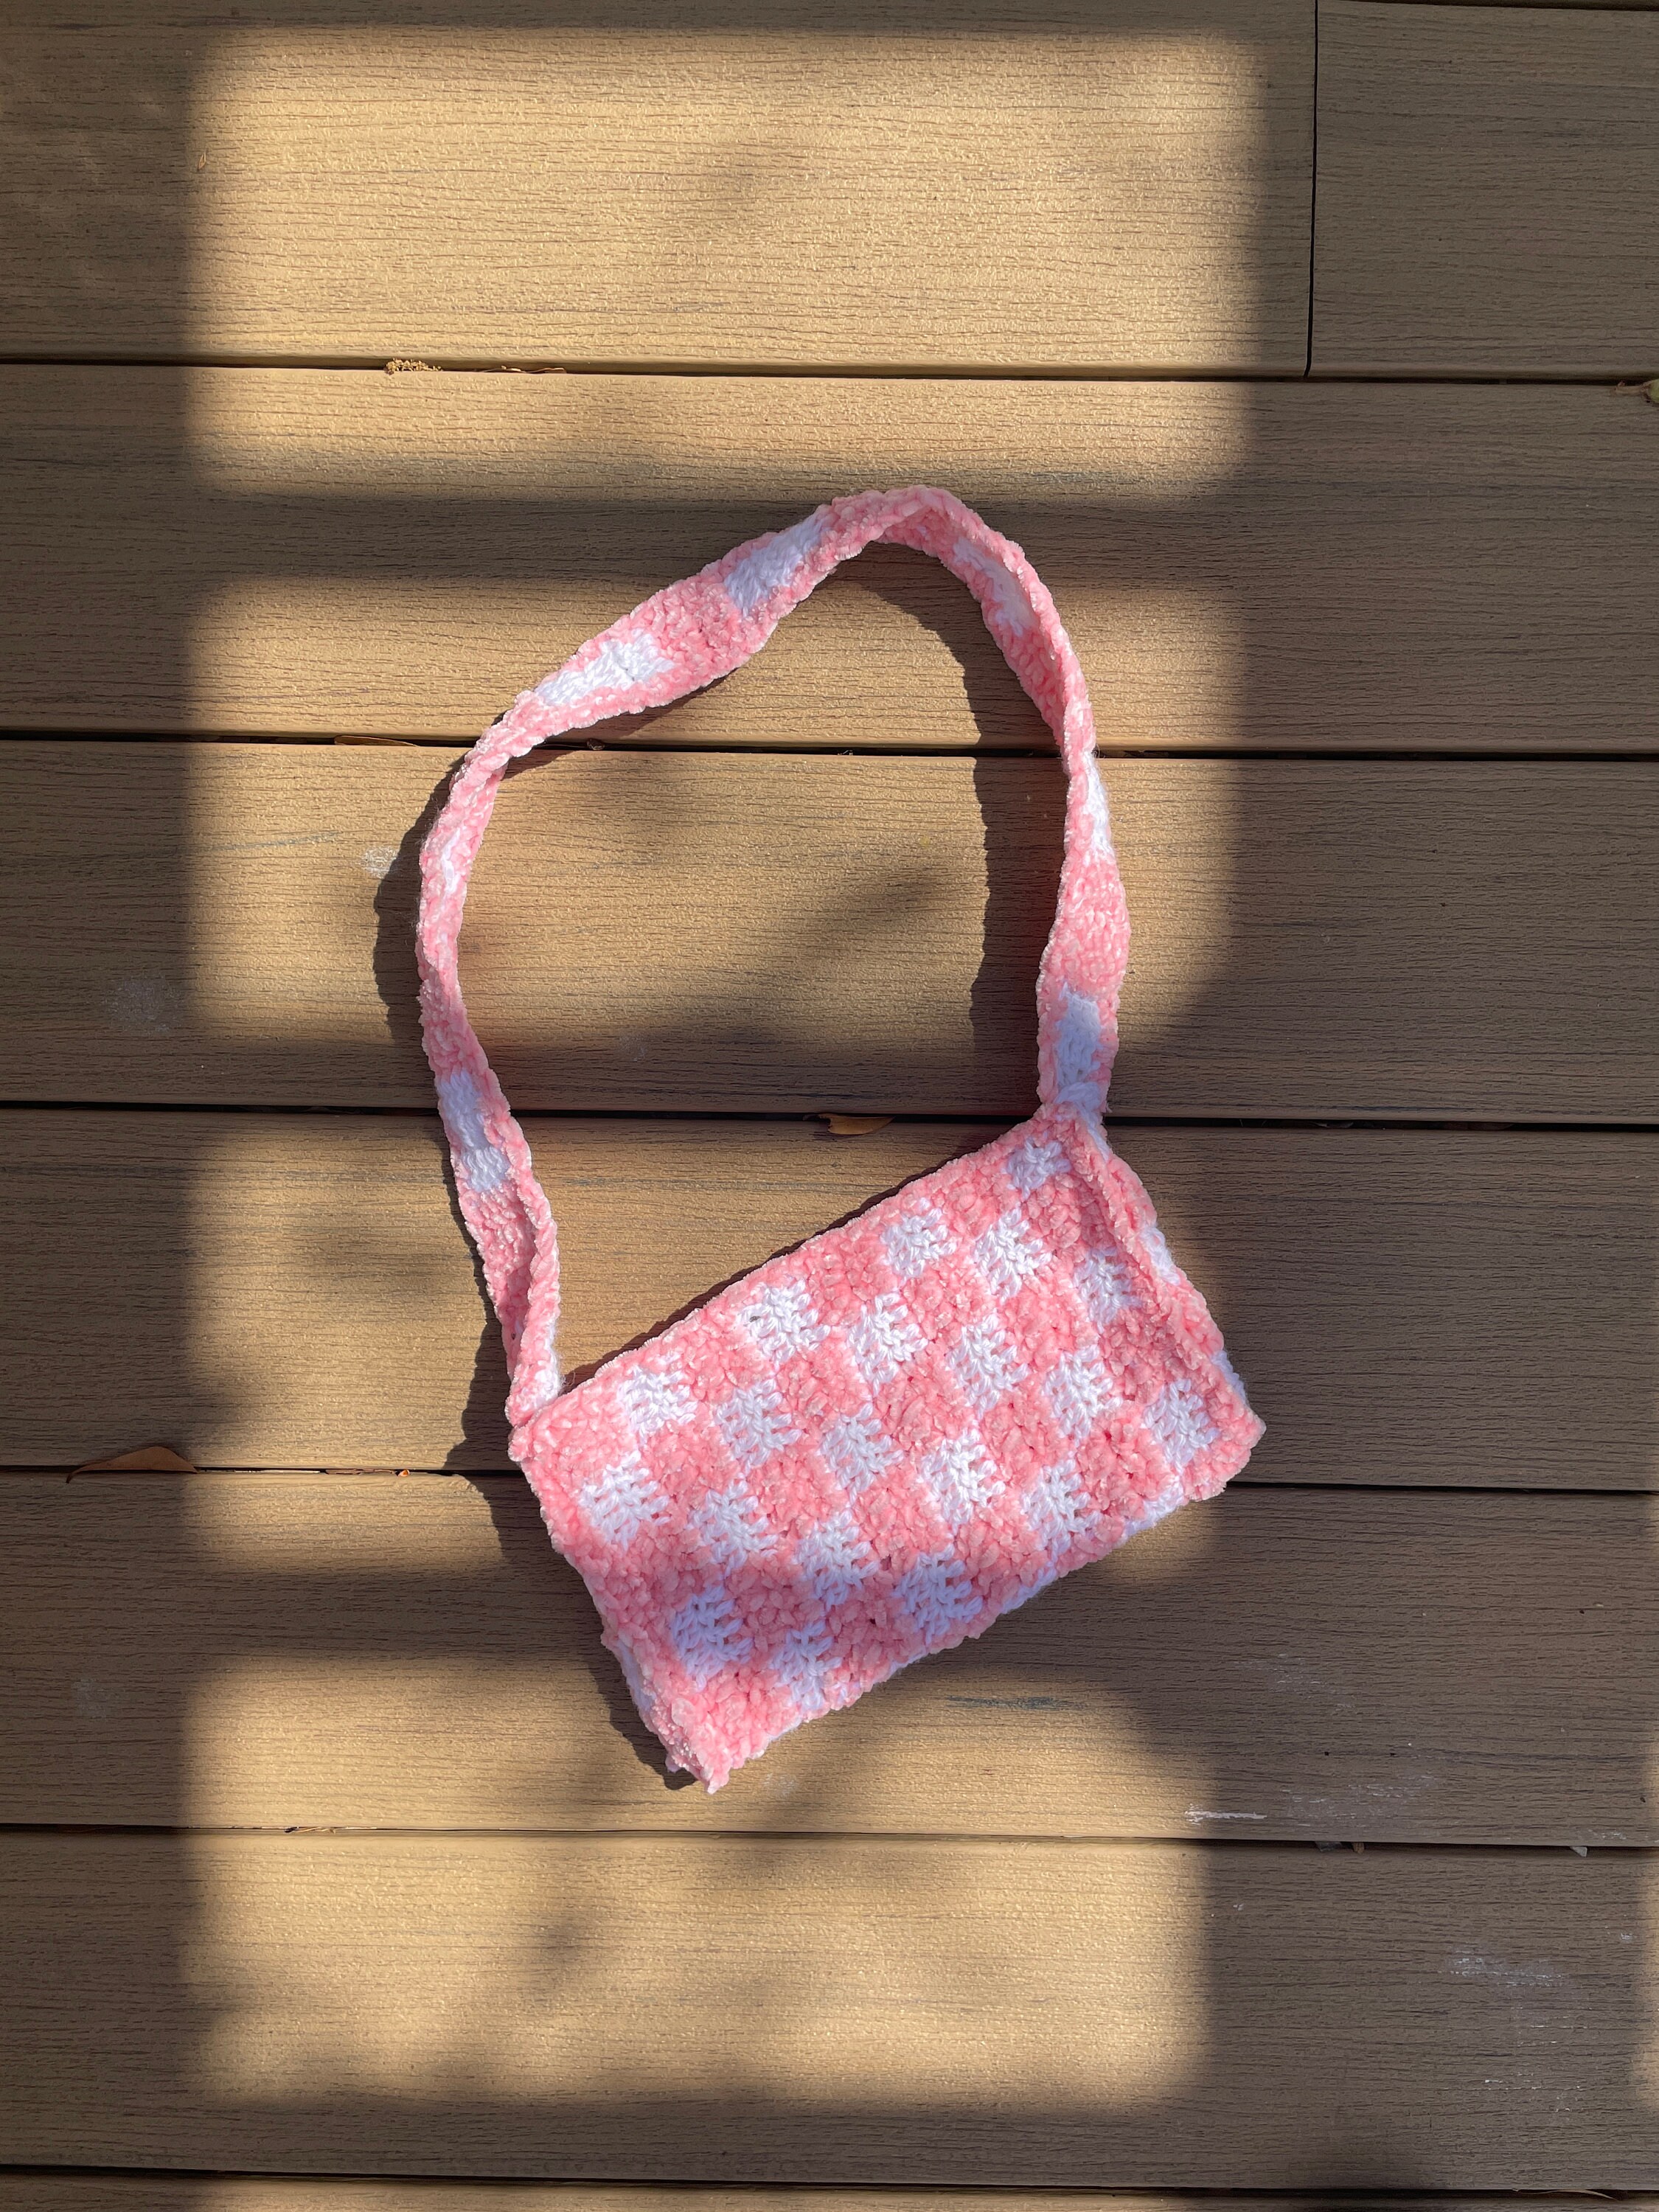 Cotton Candy Pink And Cadmium Green Checkerboard Purse Bag Handbag